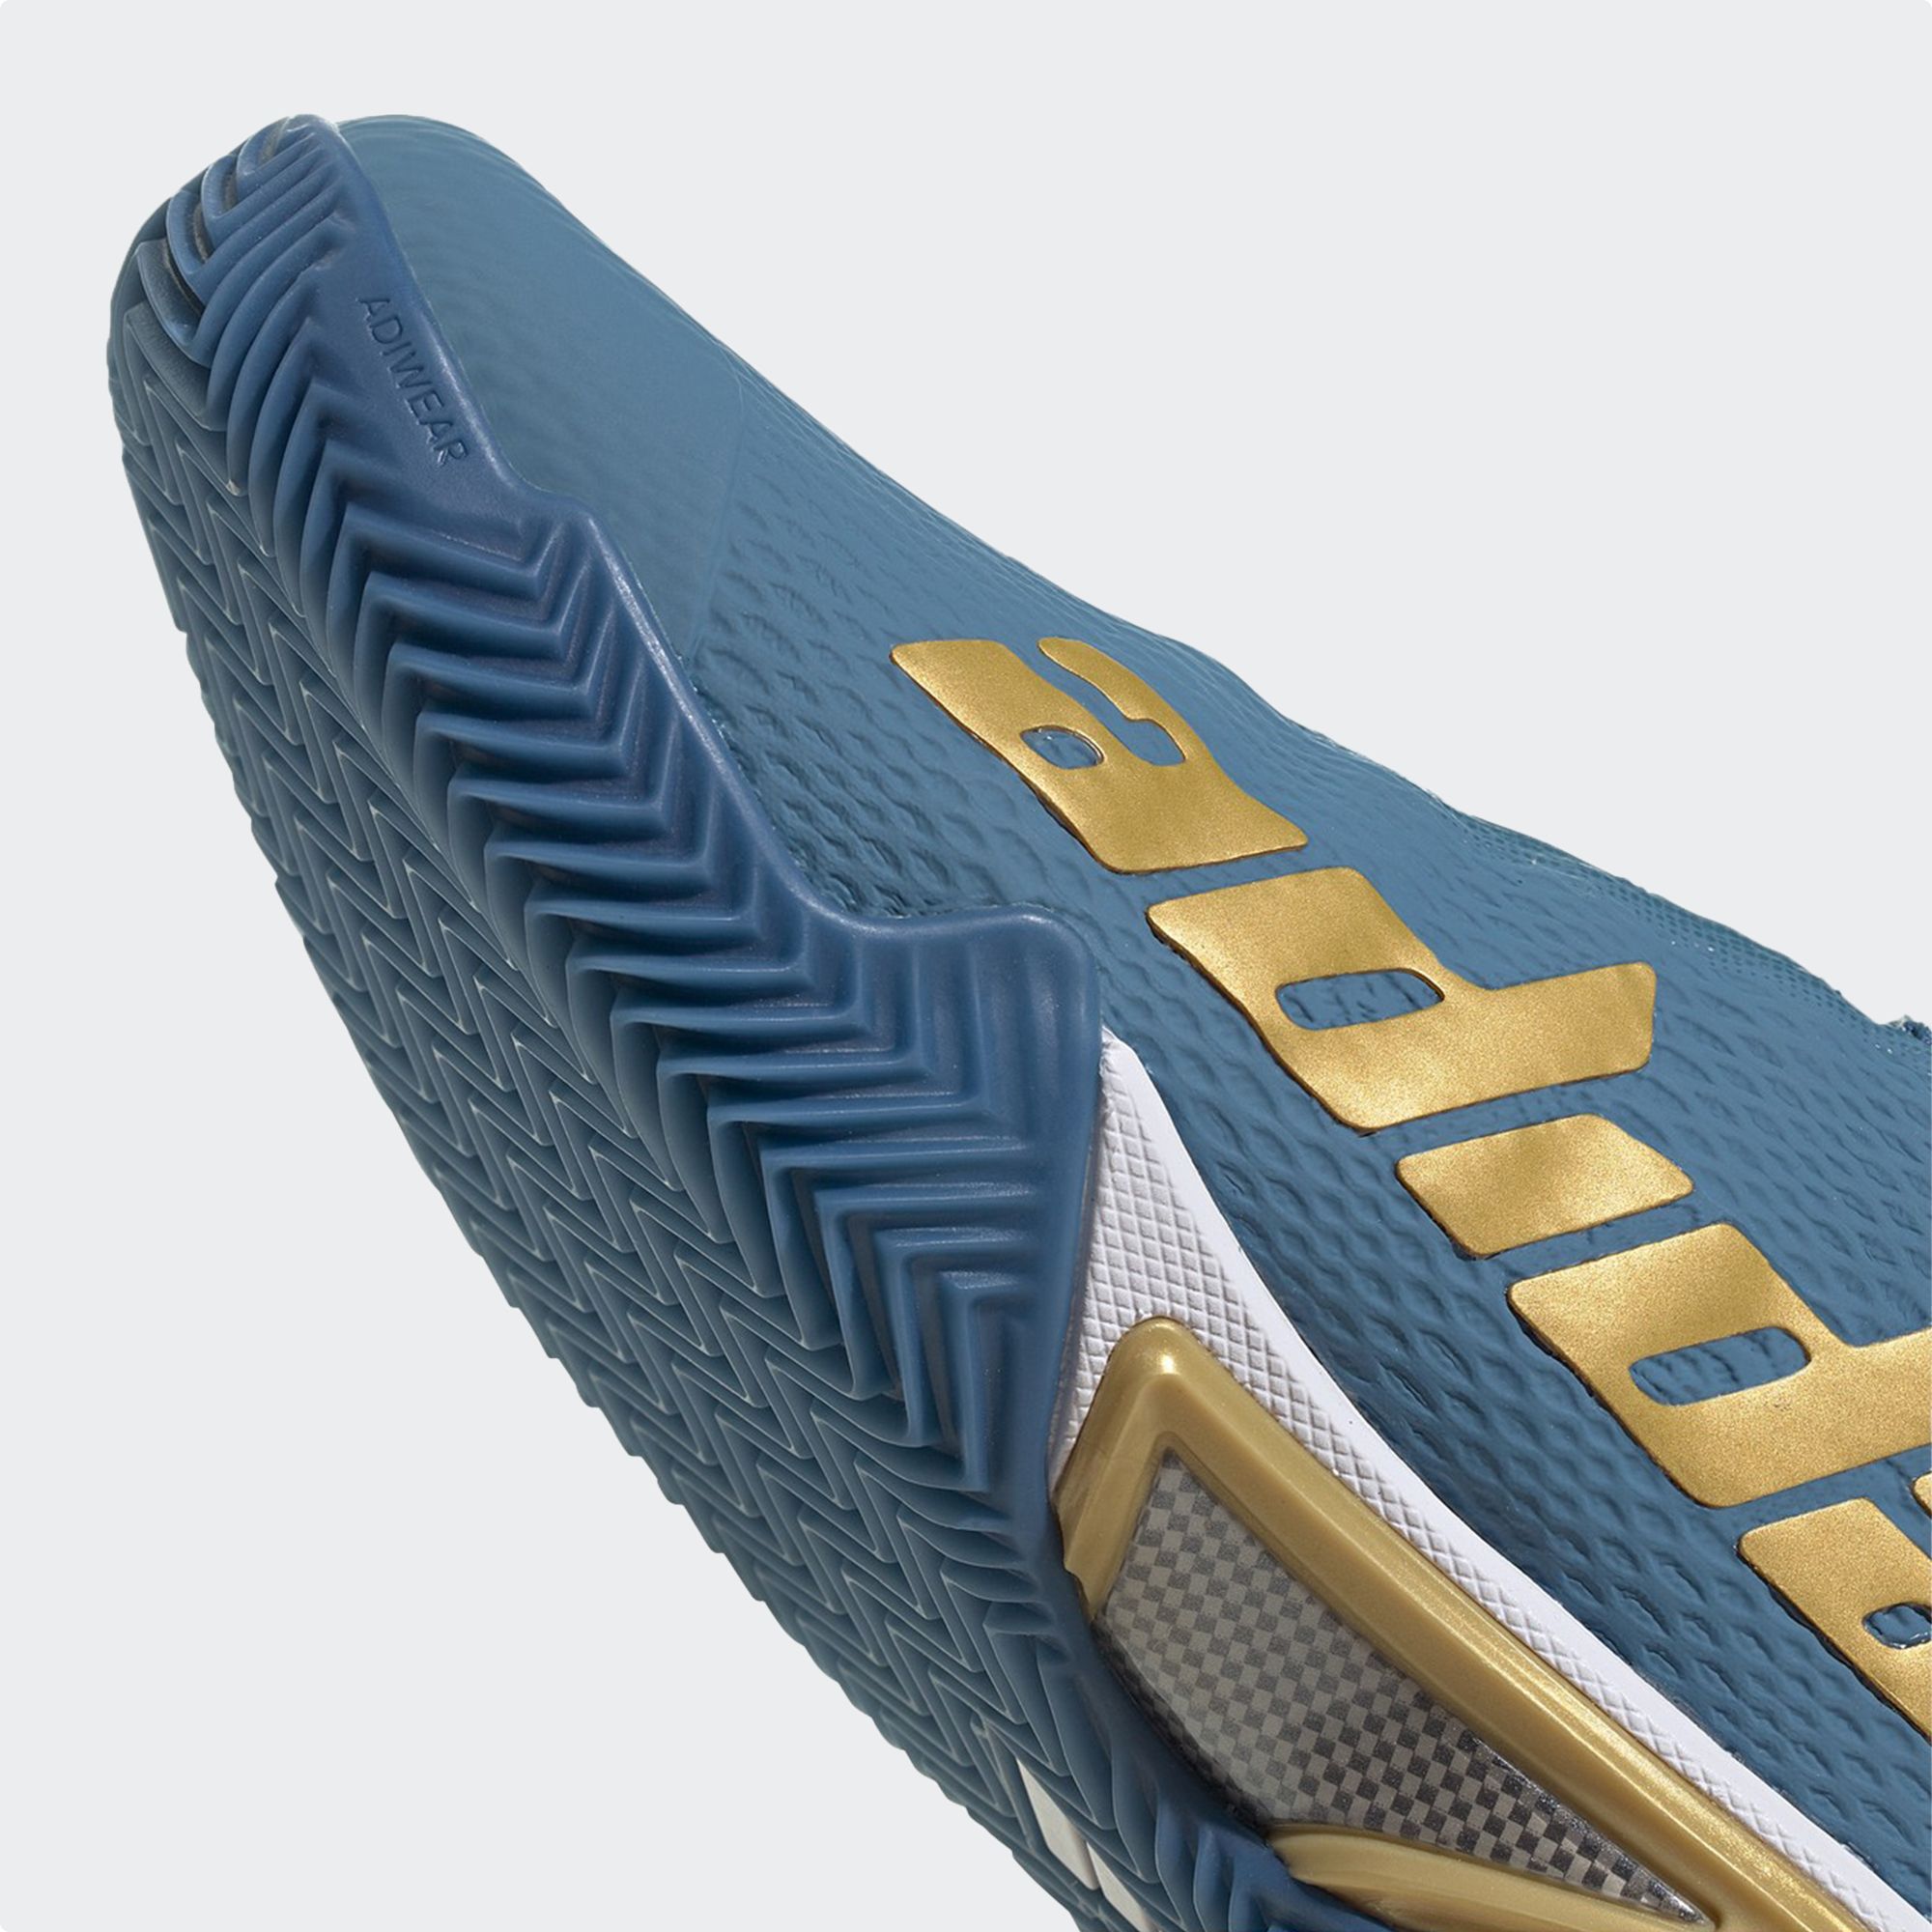  adidas Barricade W - Altered Blue/Metallic Gold 